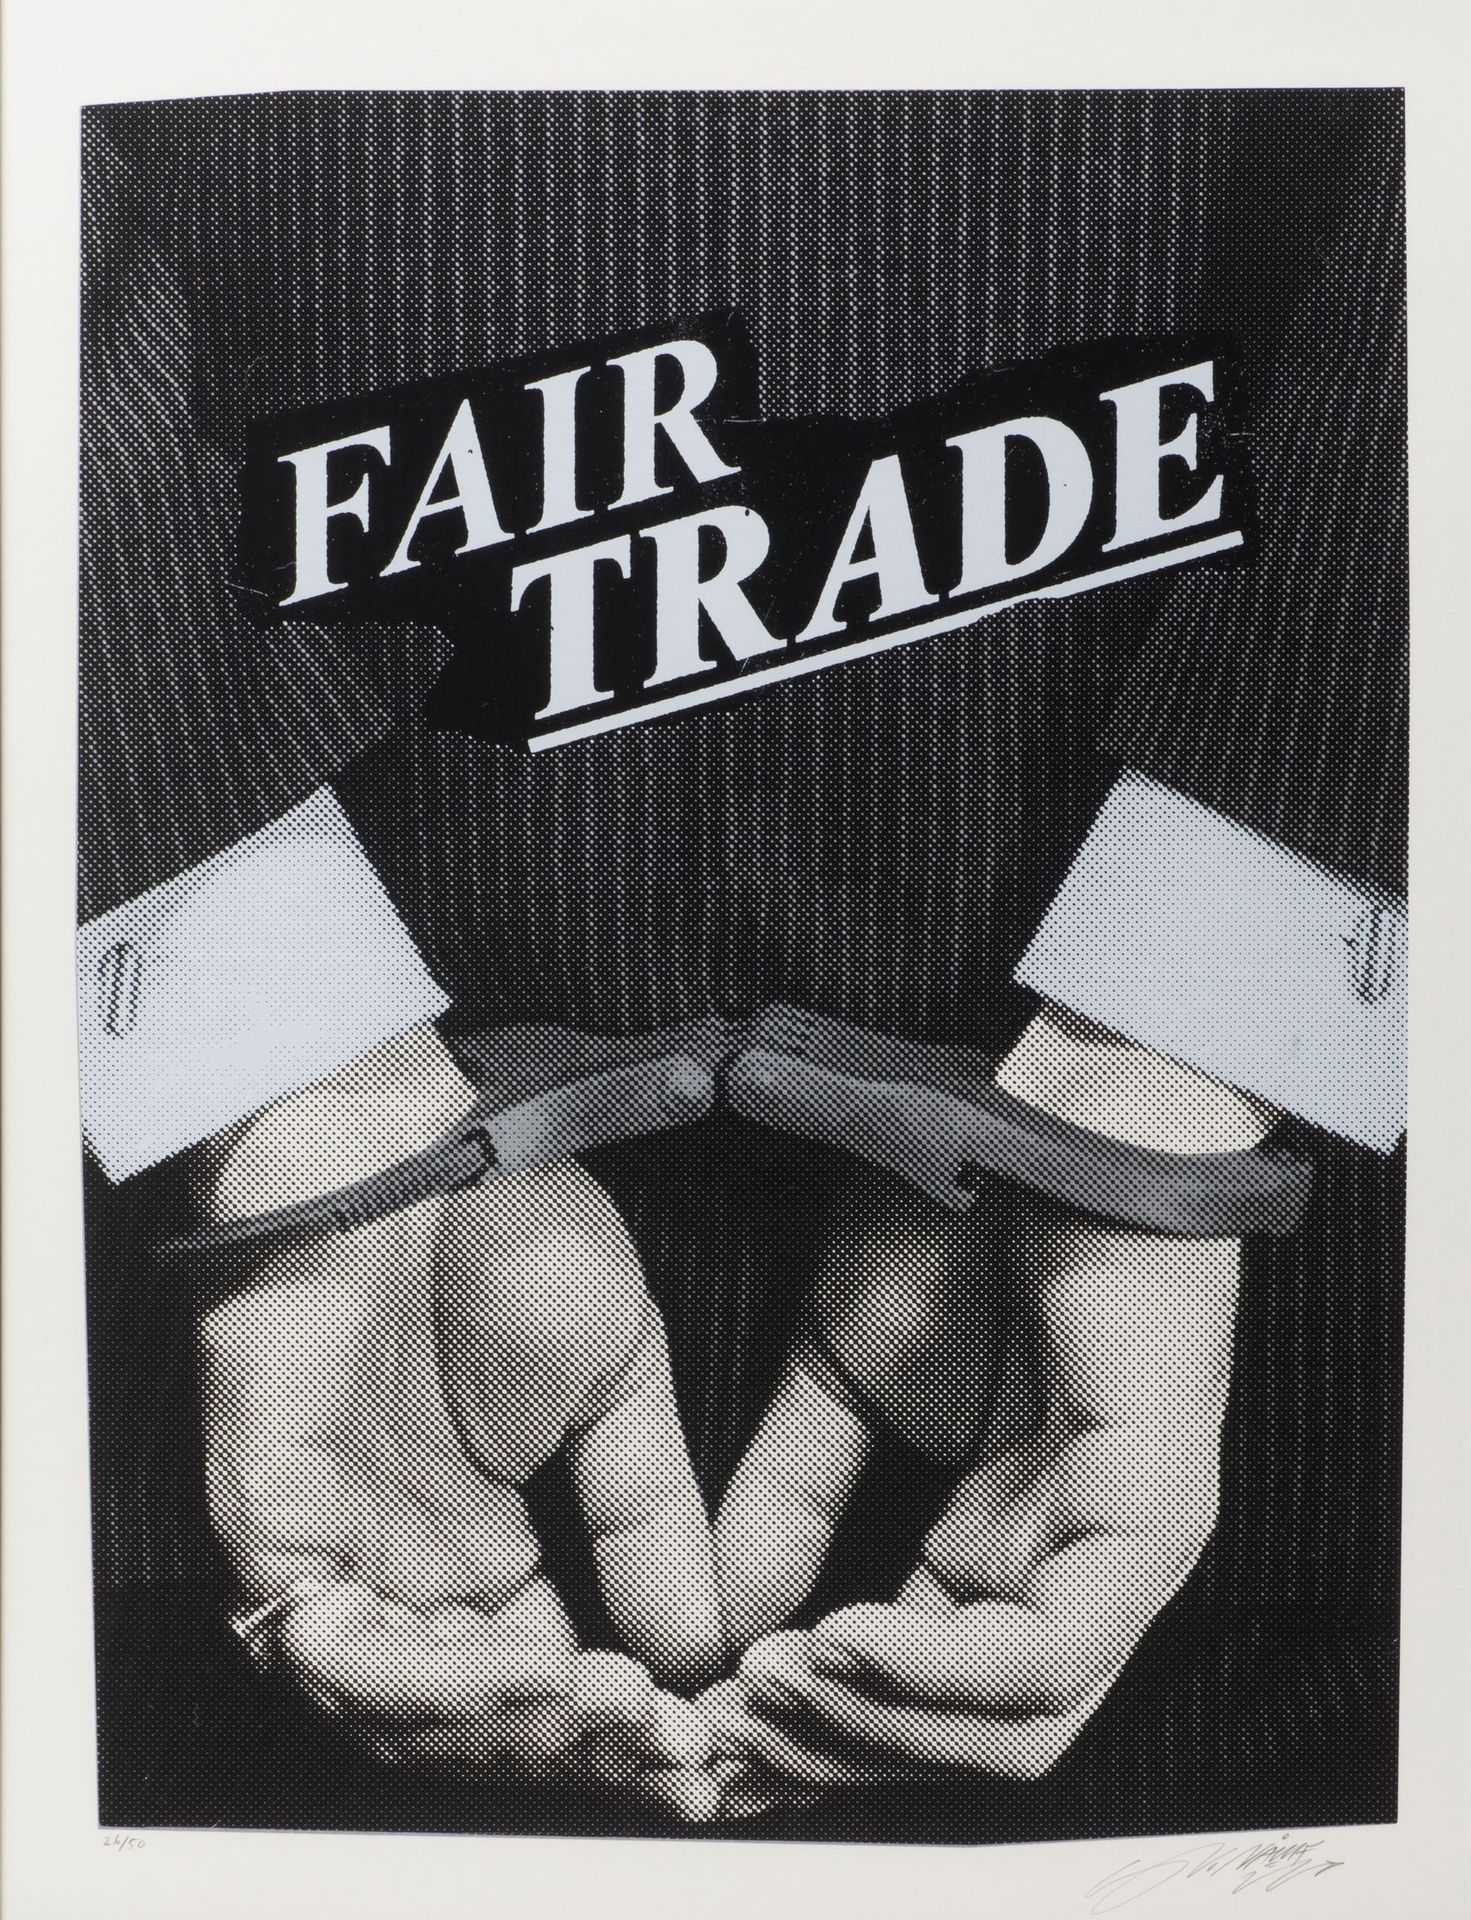 Null NoNAME Fair Trade, 2020

Silkscreen on archival Gmund Act Gren 300g paper, &hellip;